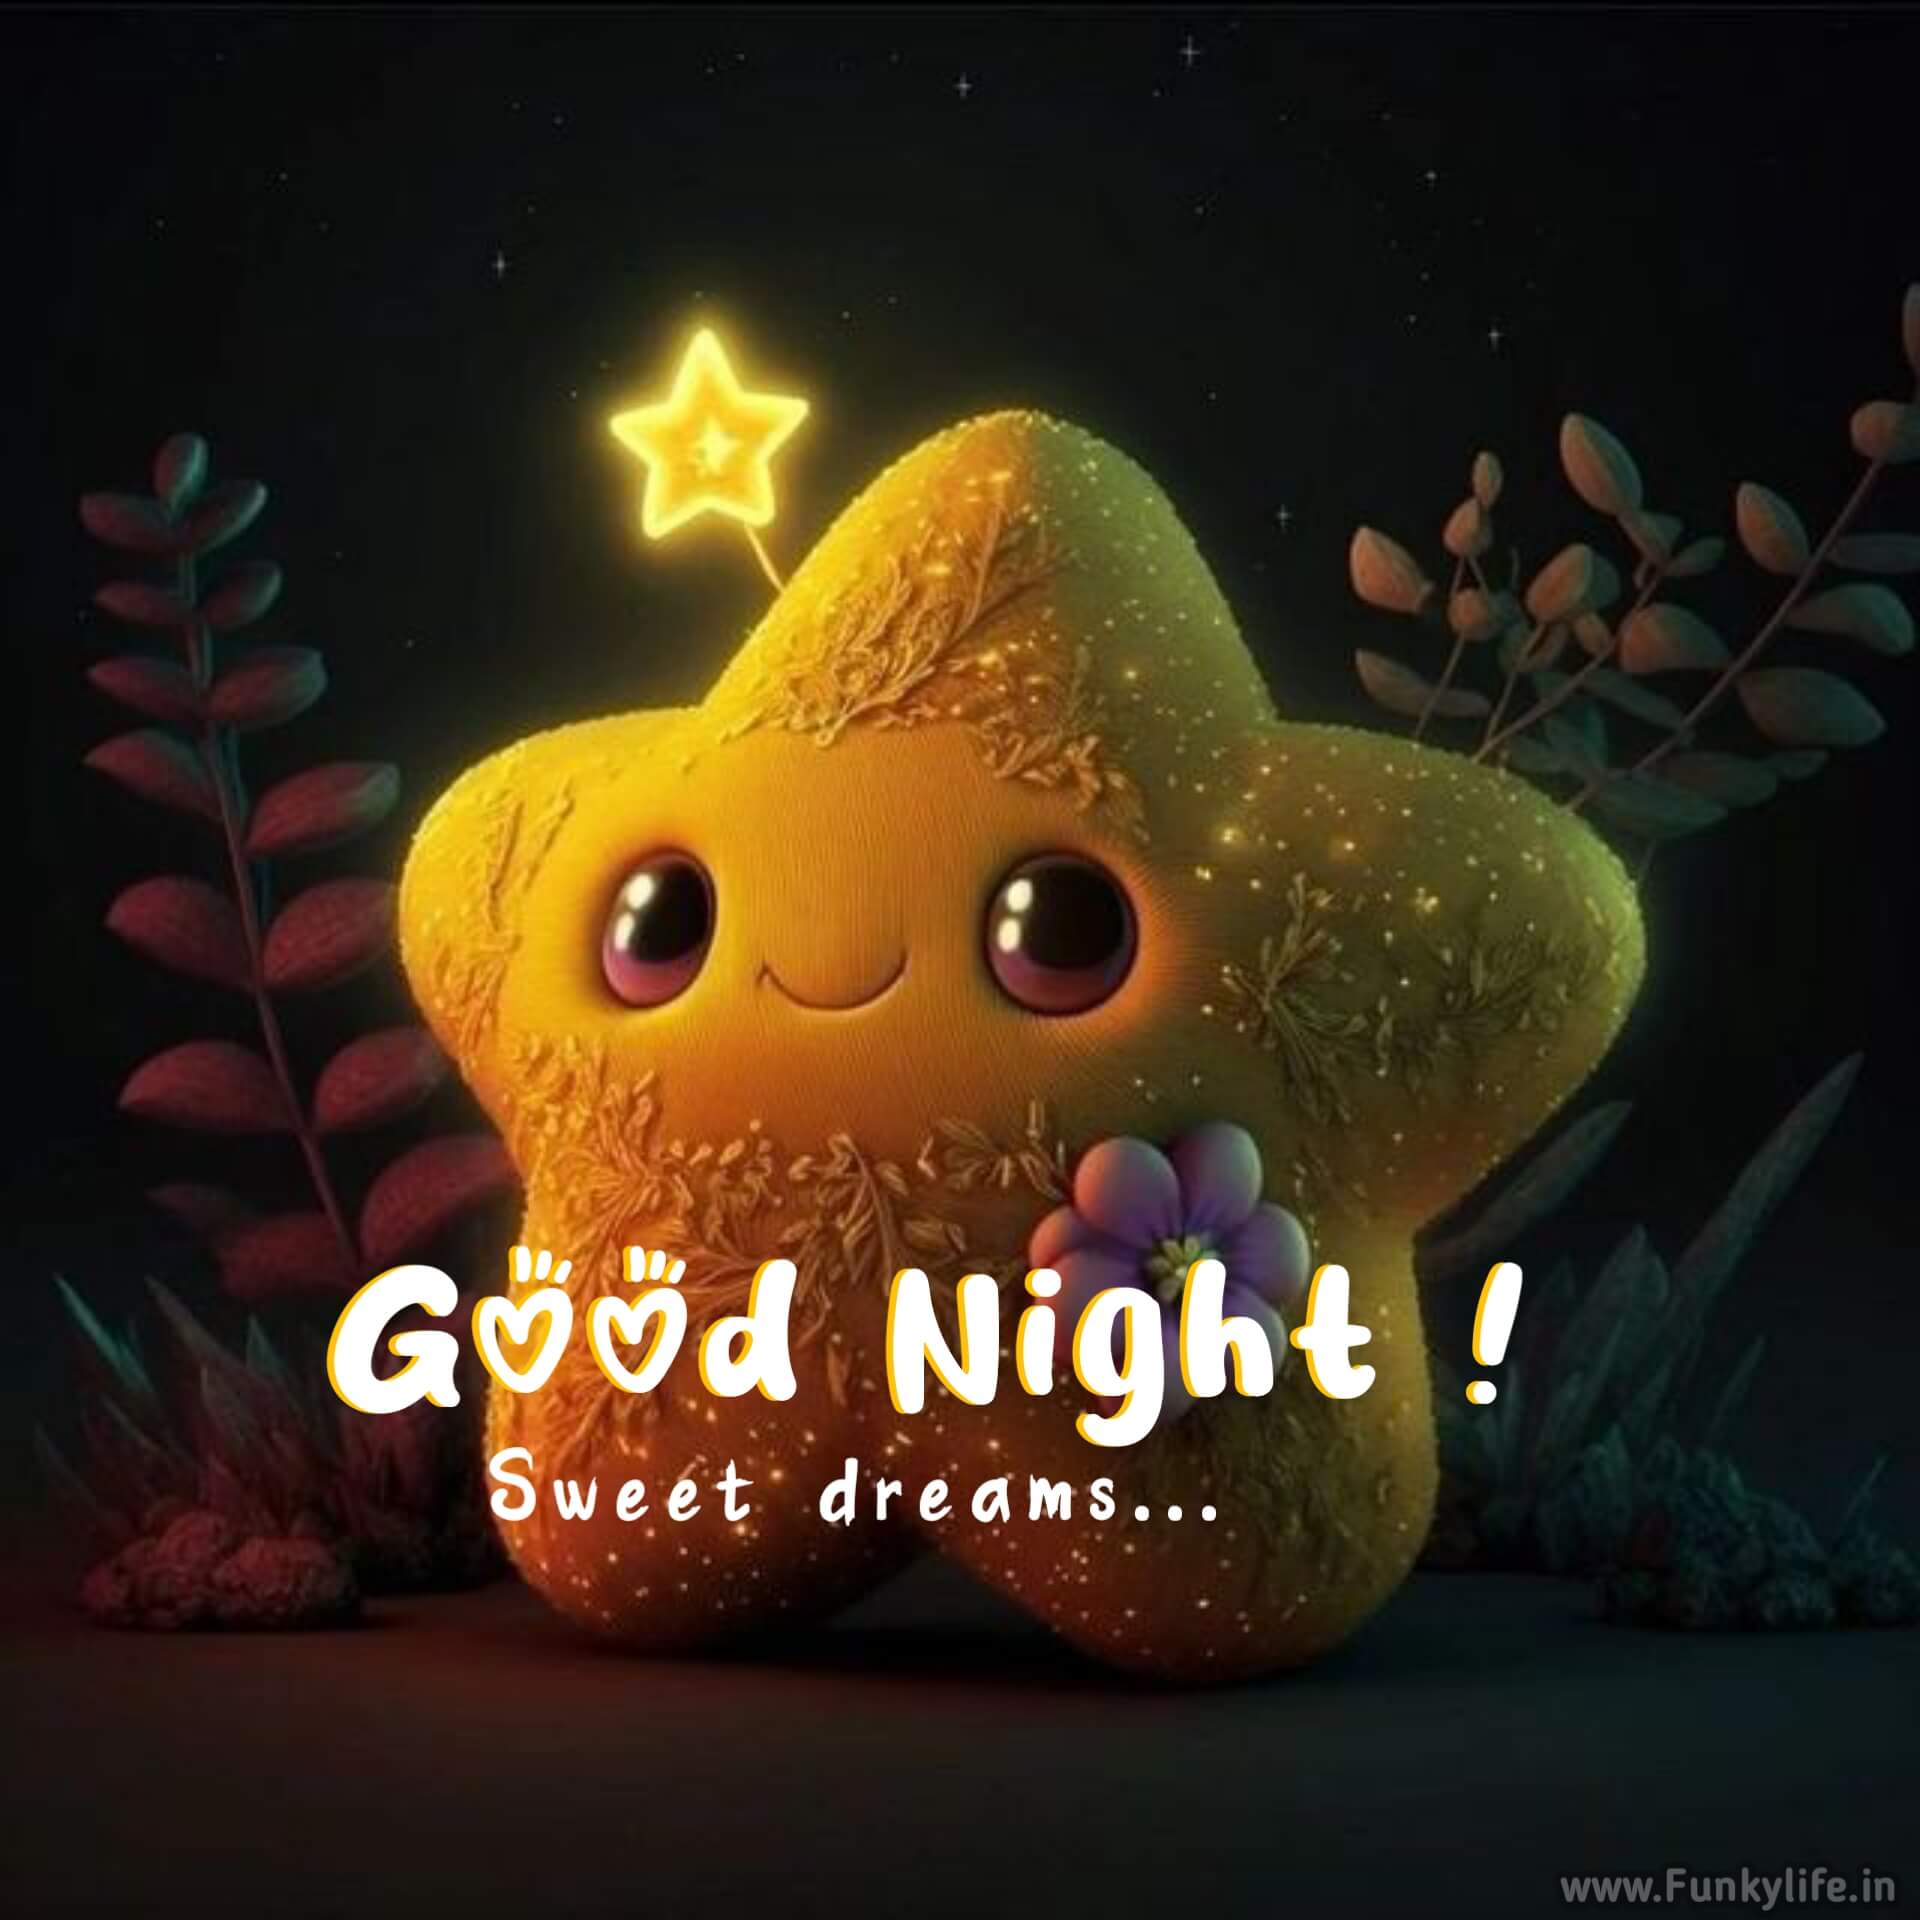 Star Good night image